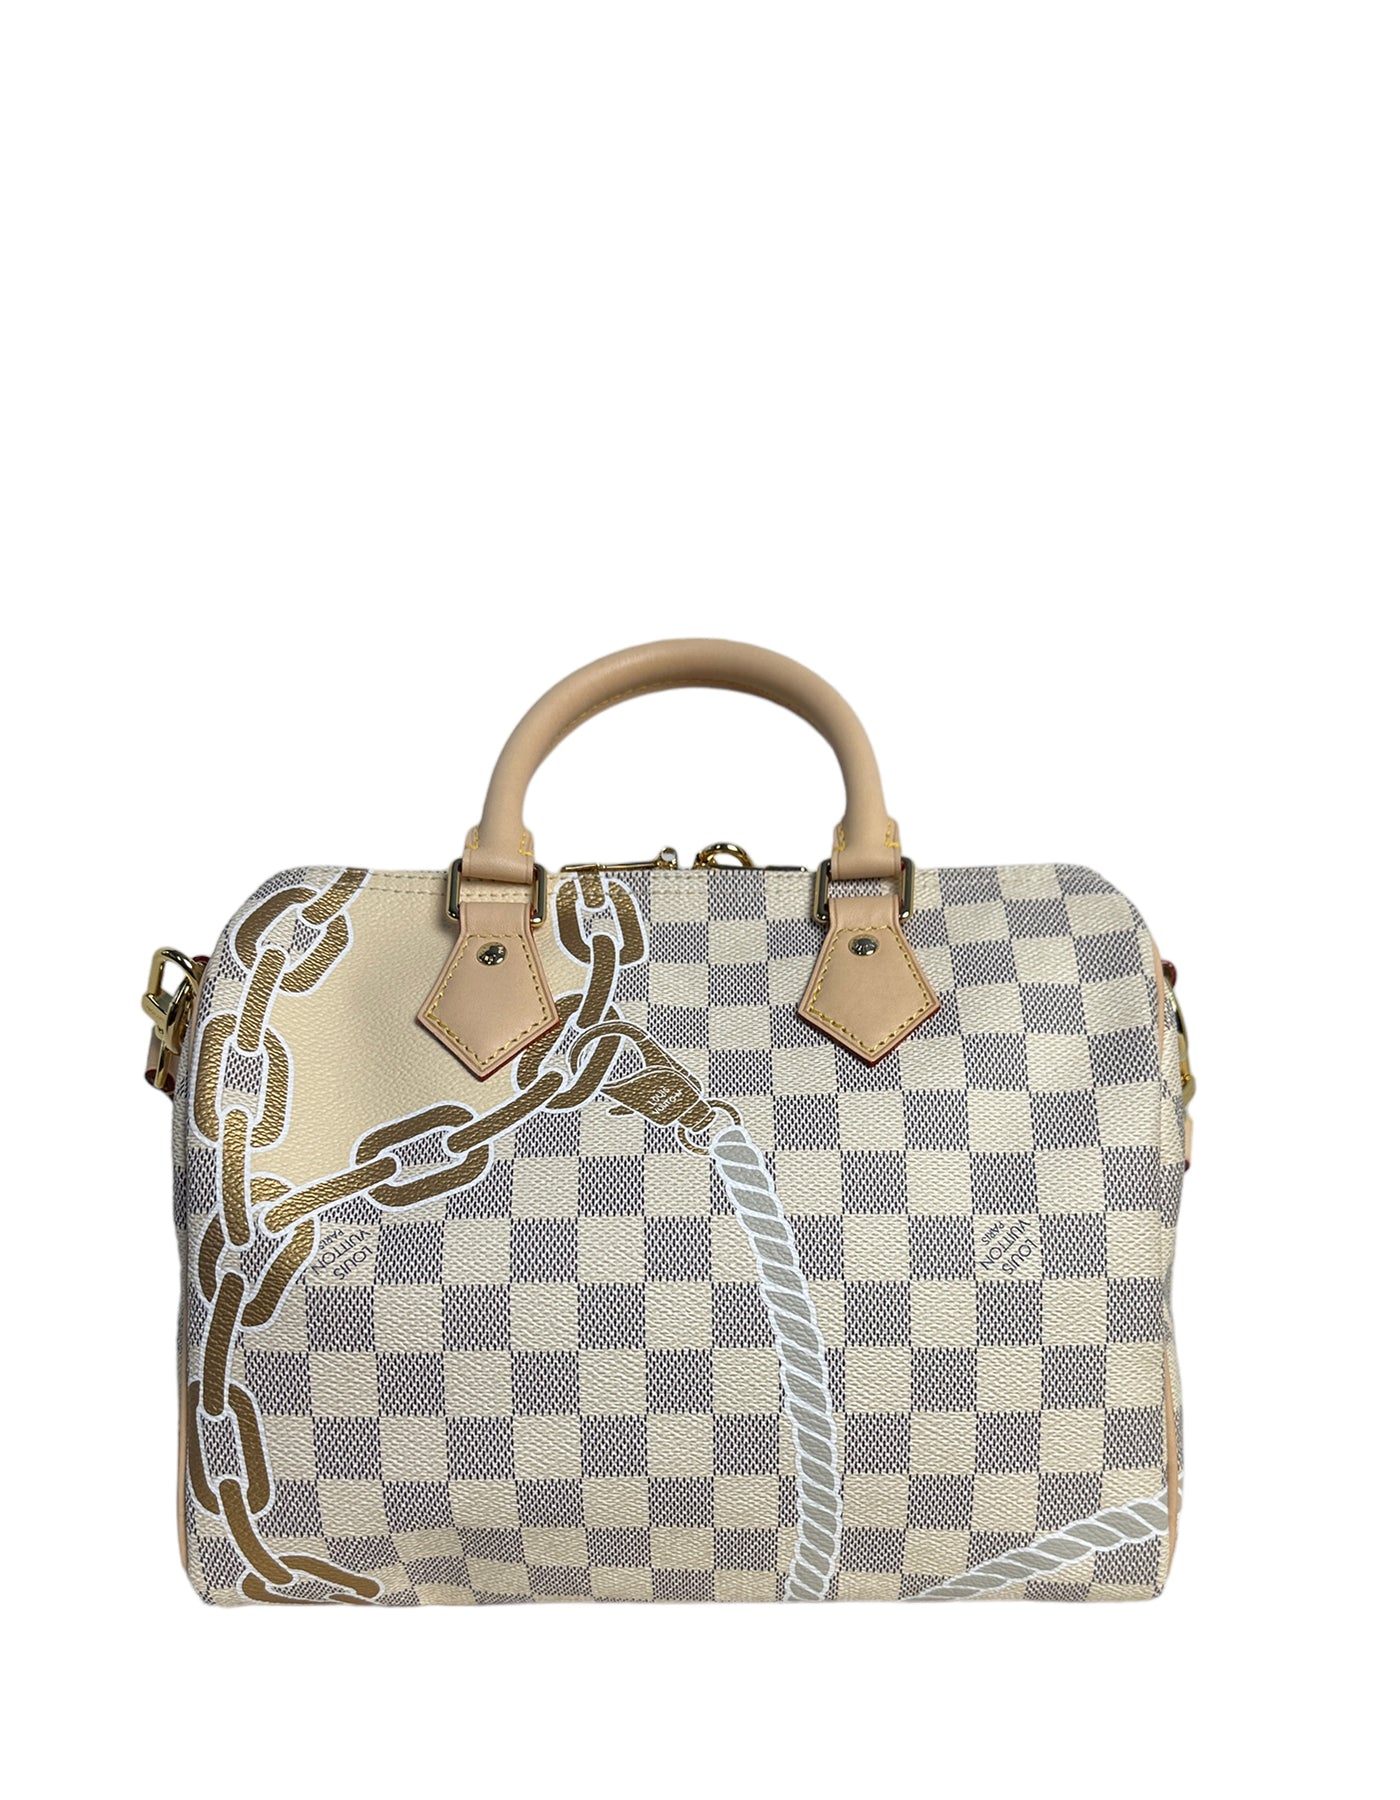 Louis Vuitton Speedy Bandouliere Bag Limited Edition Nautical Damier 25 White